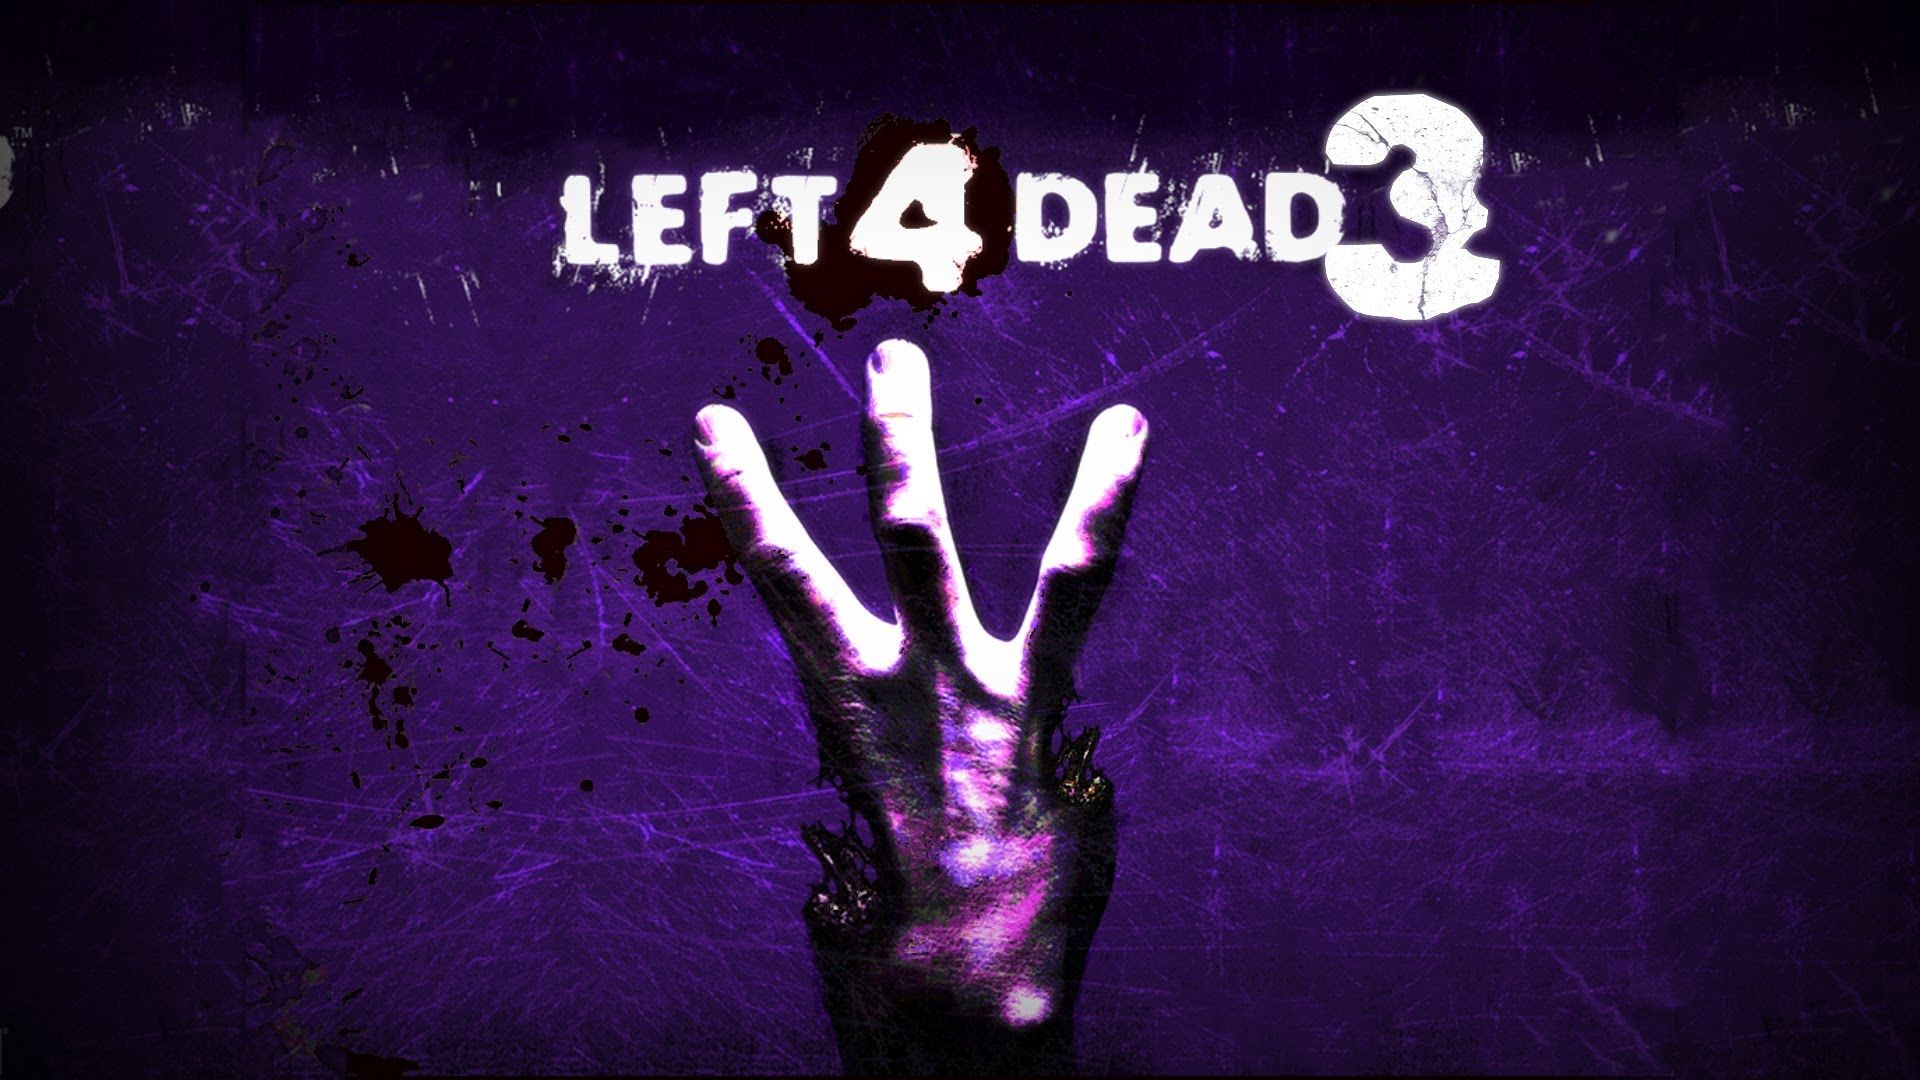 left 4 dead 3 zombie ideas